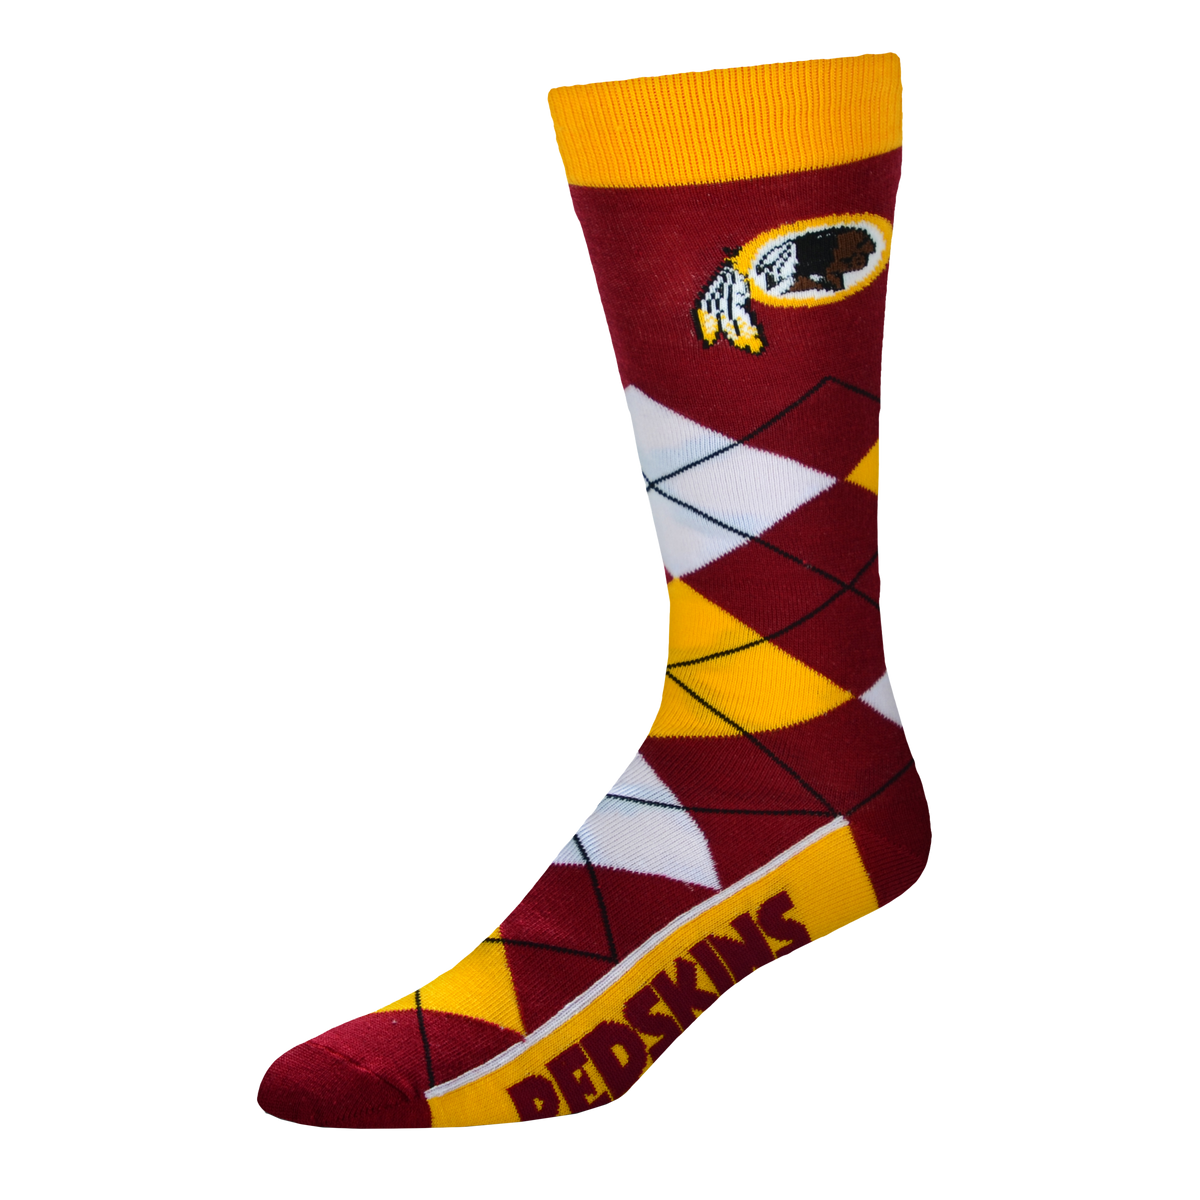 Washington Redskins - Argyle Lineup Socks